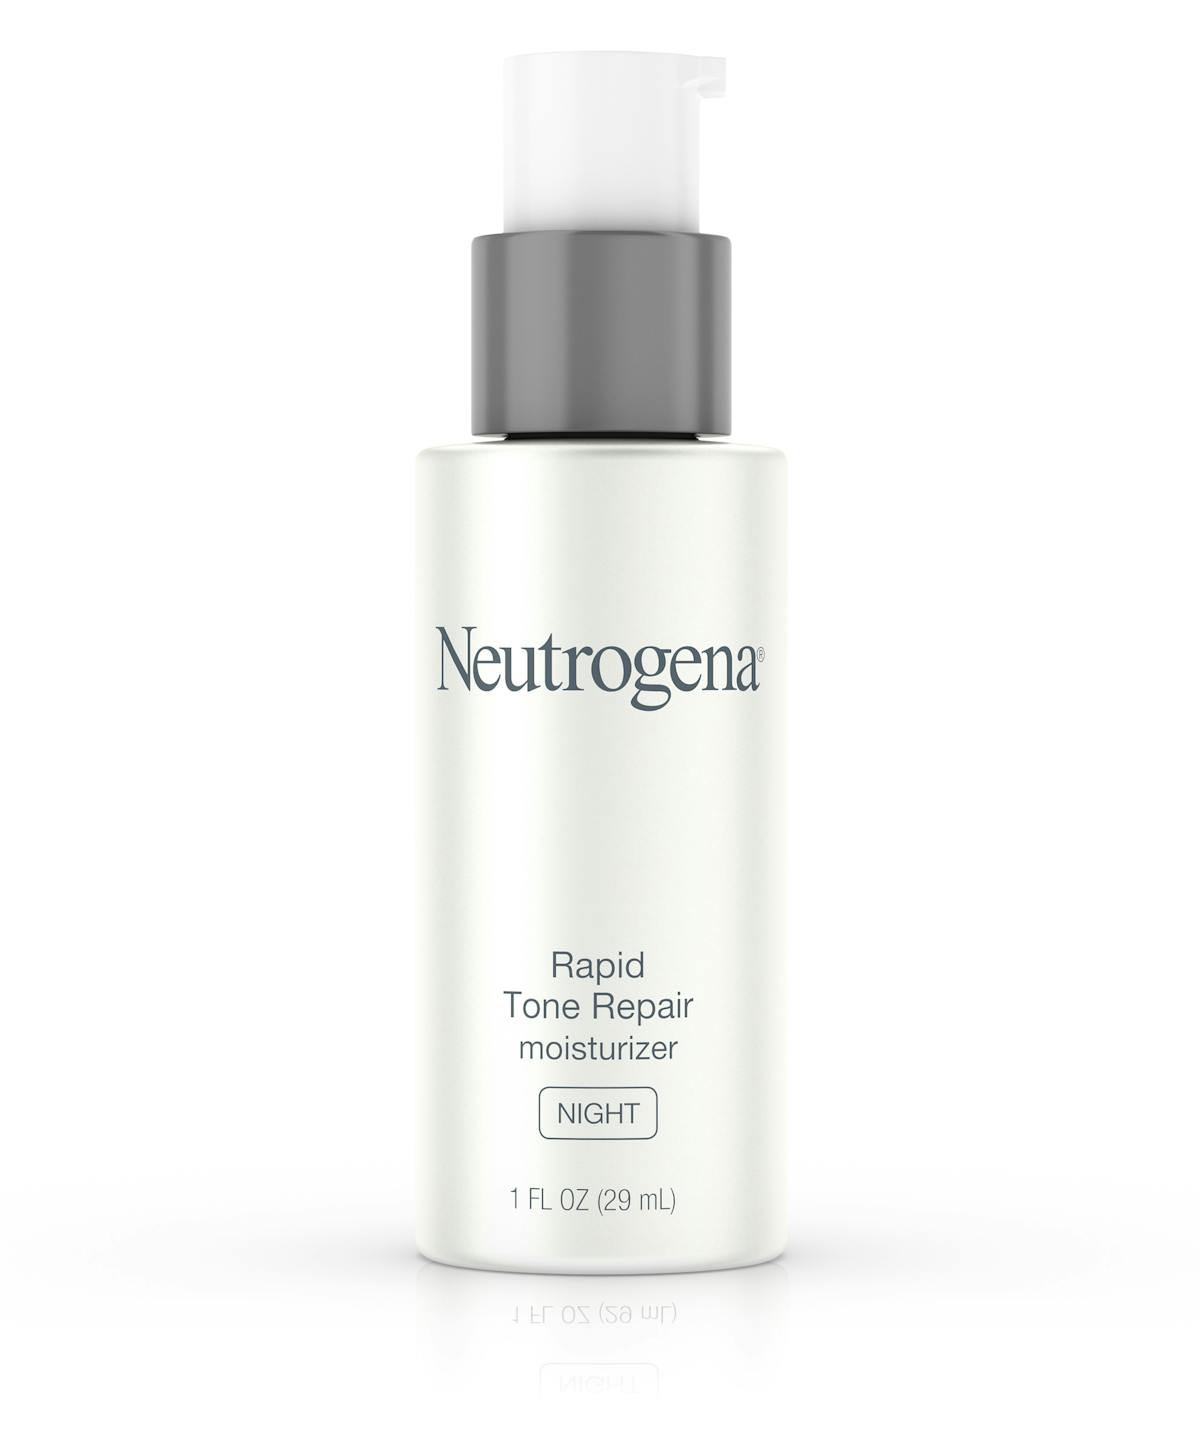 neutrogena rapid wrinkle repair night face moisturizer